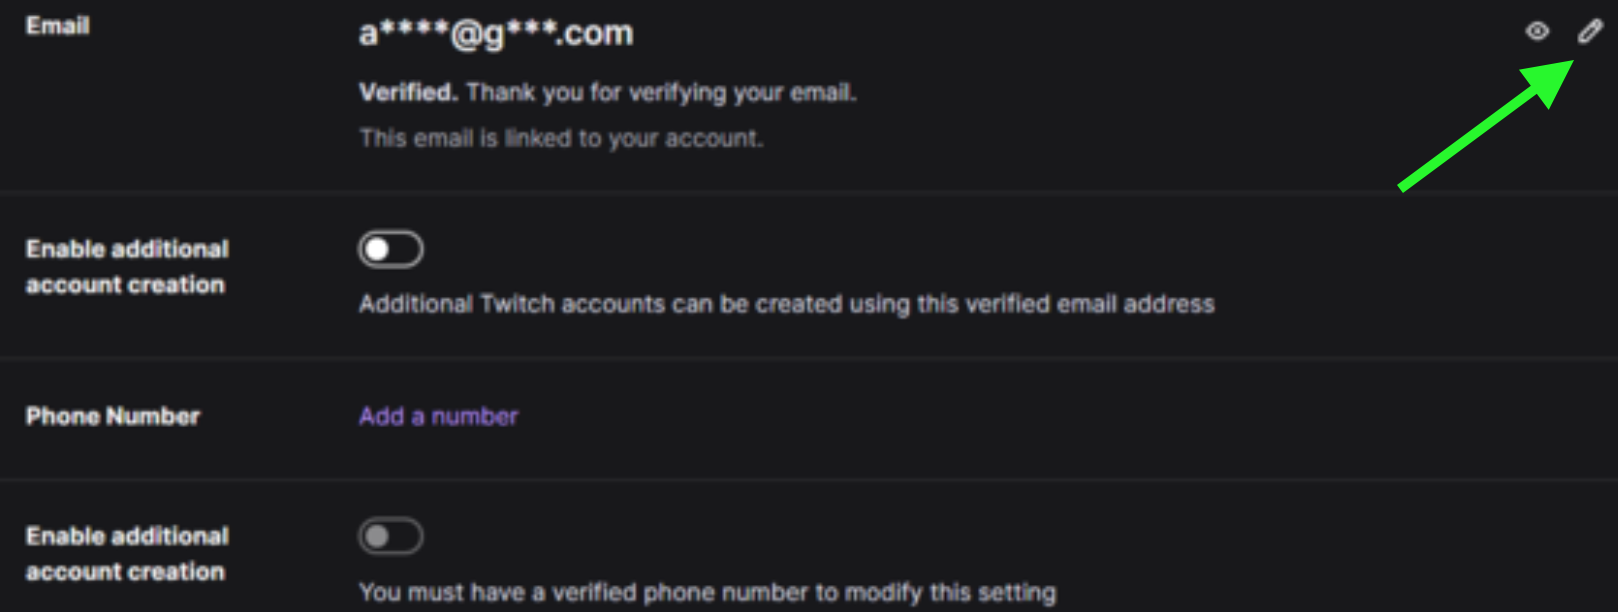 Change email address - Twitch